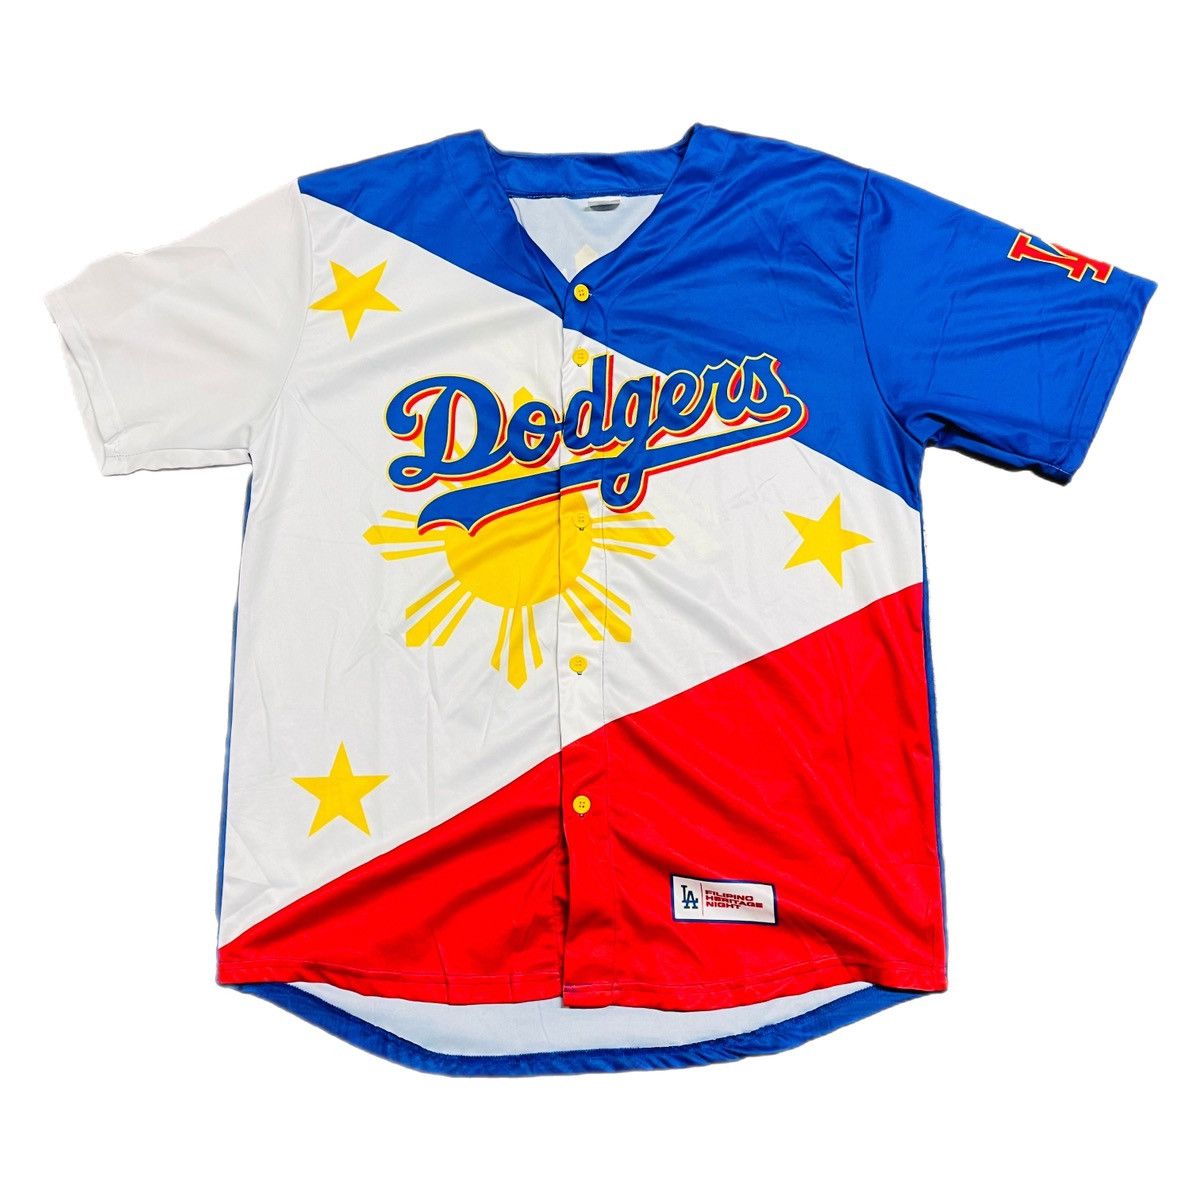 Los Angeles Dodgers Filipino Heritage Night 2021 Jersey XL